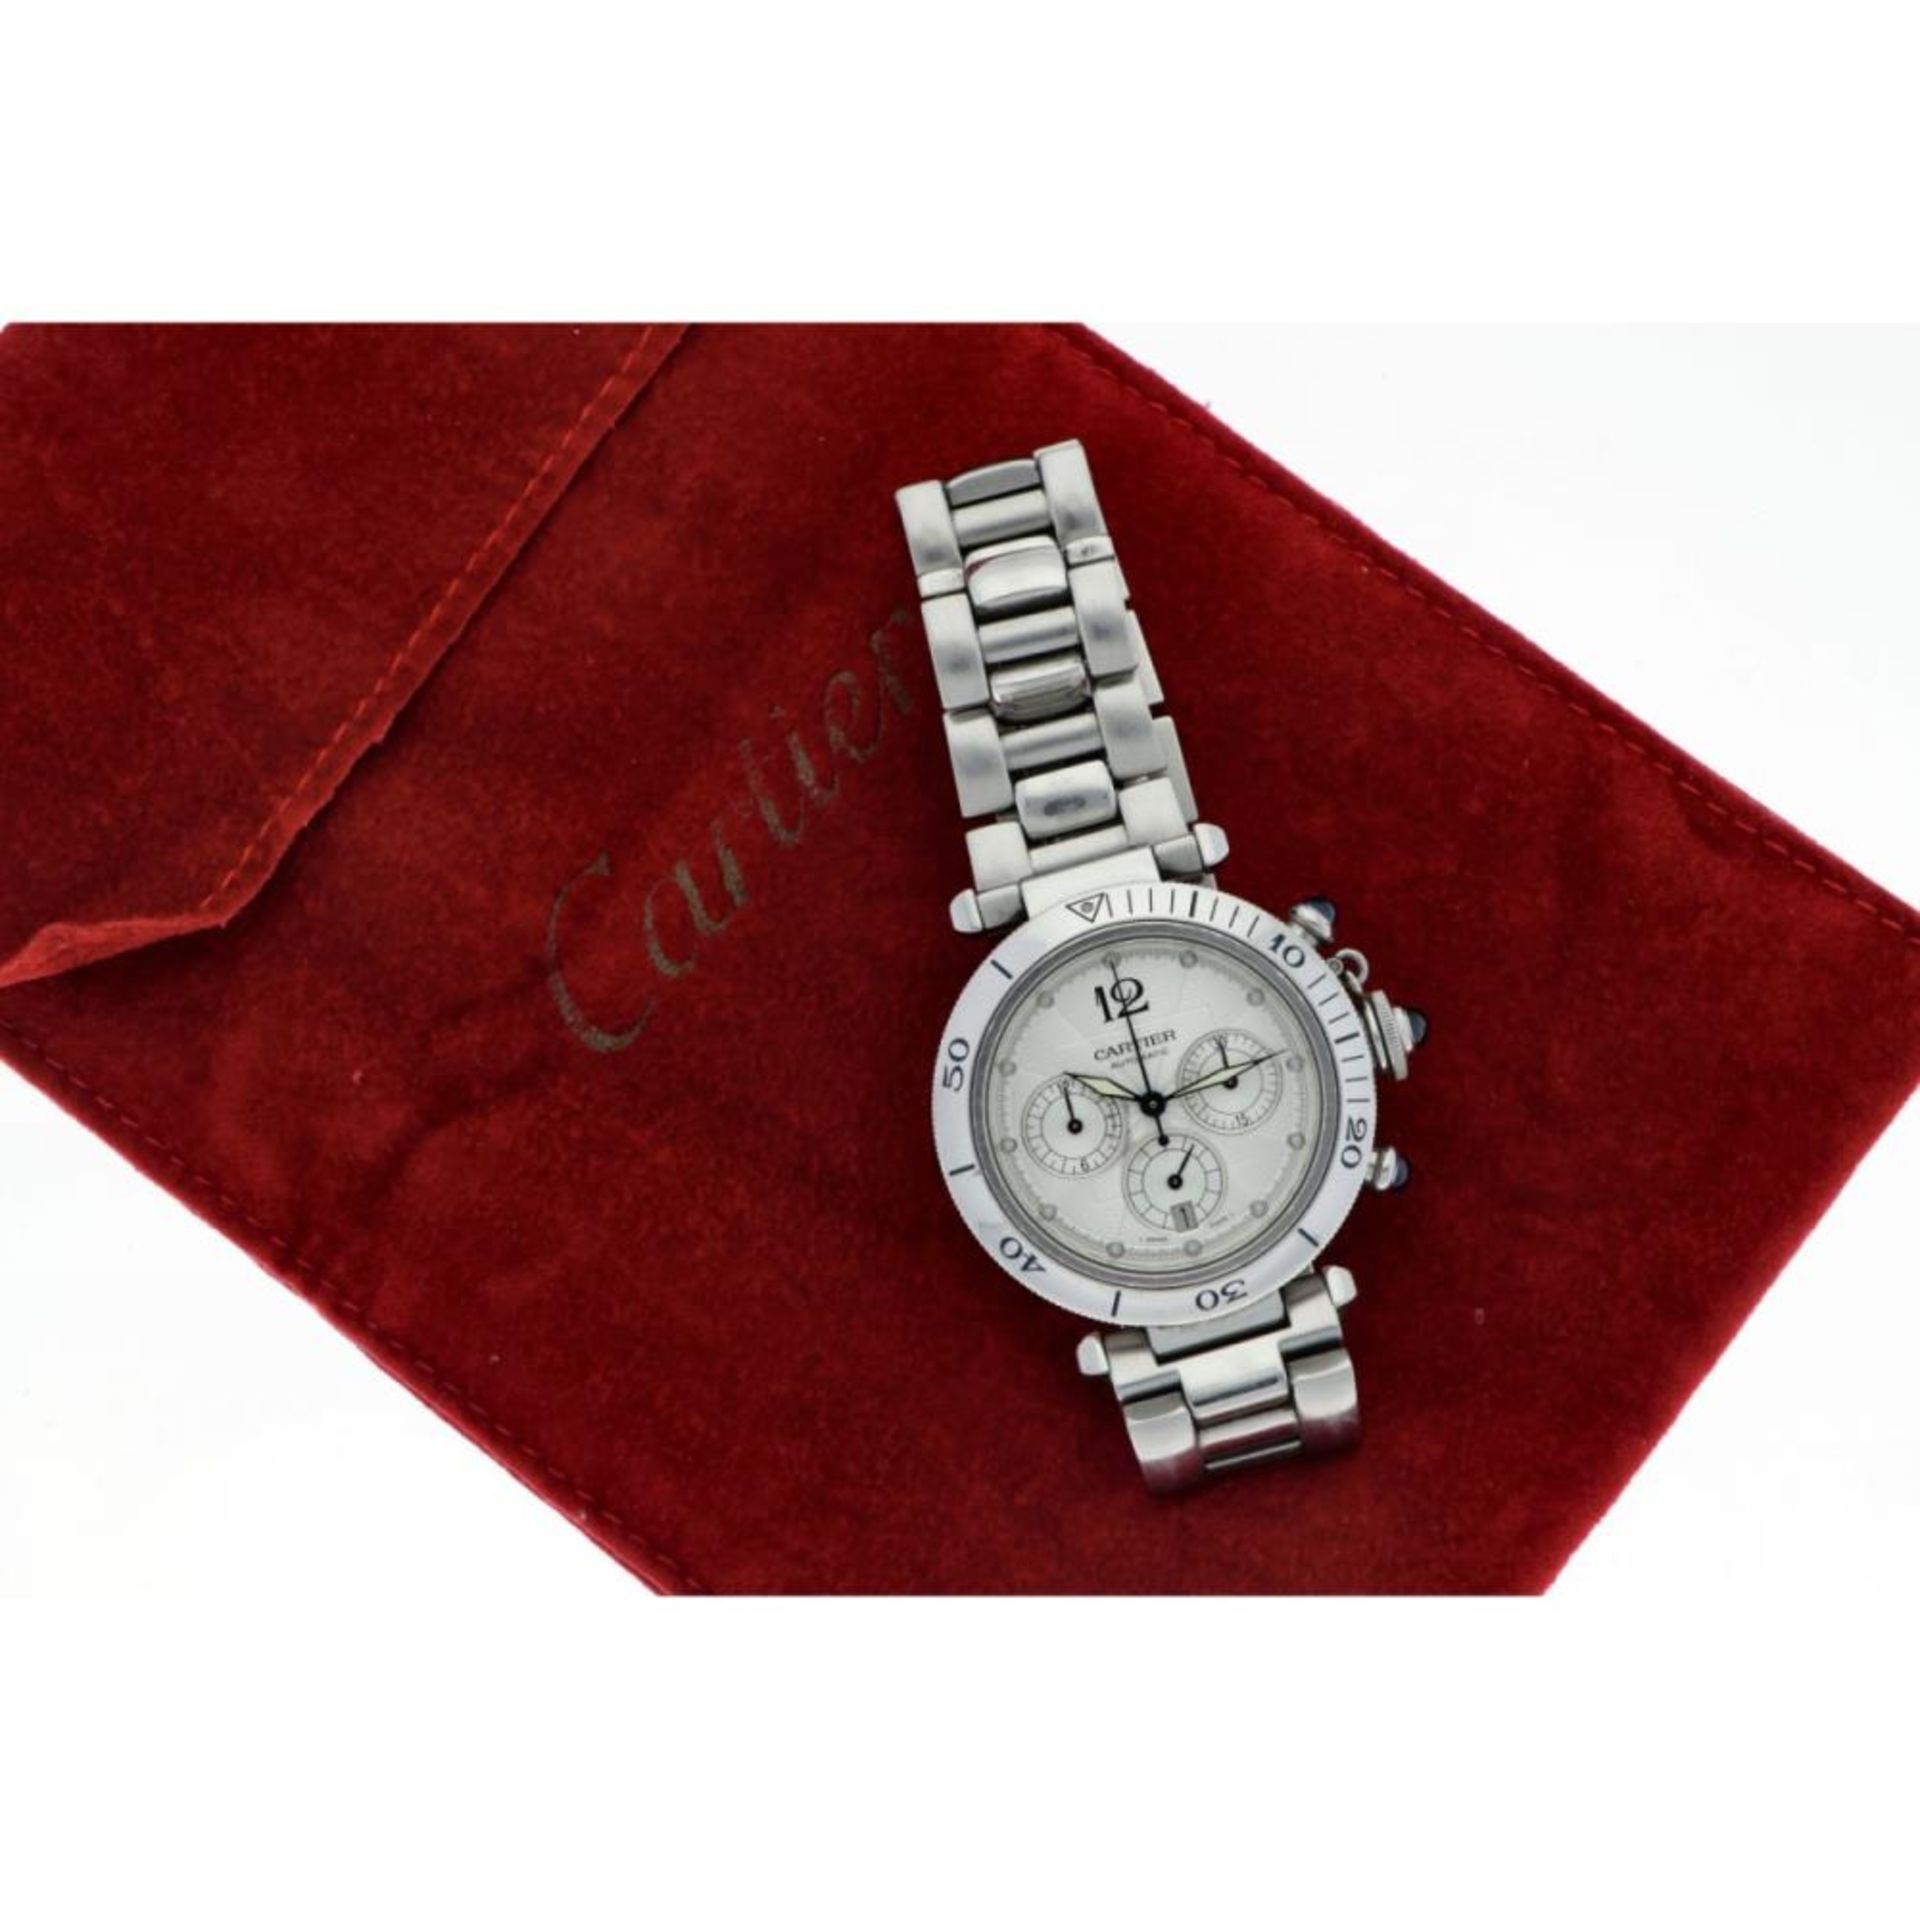 Cartier Pasha 2113 - Men's watch - approx. 2010. - Image 12 of 12